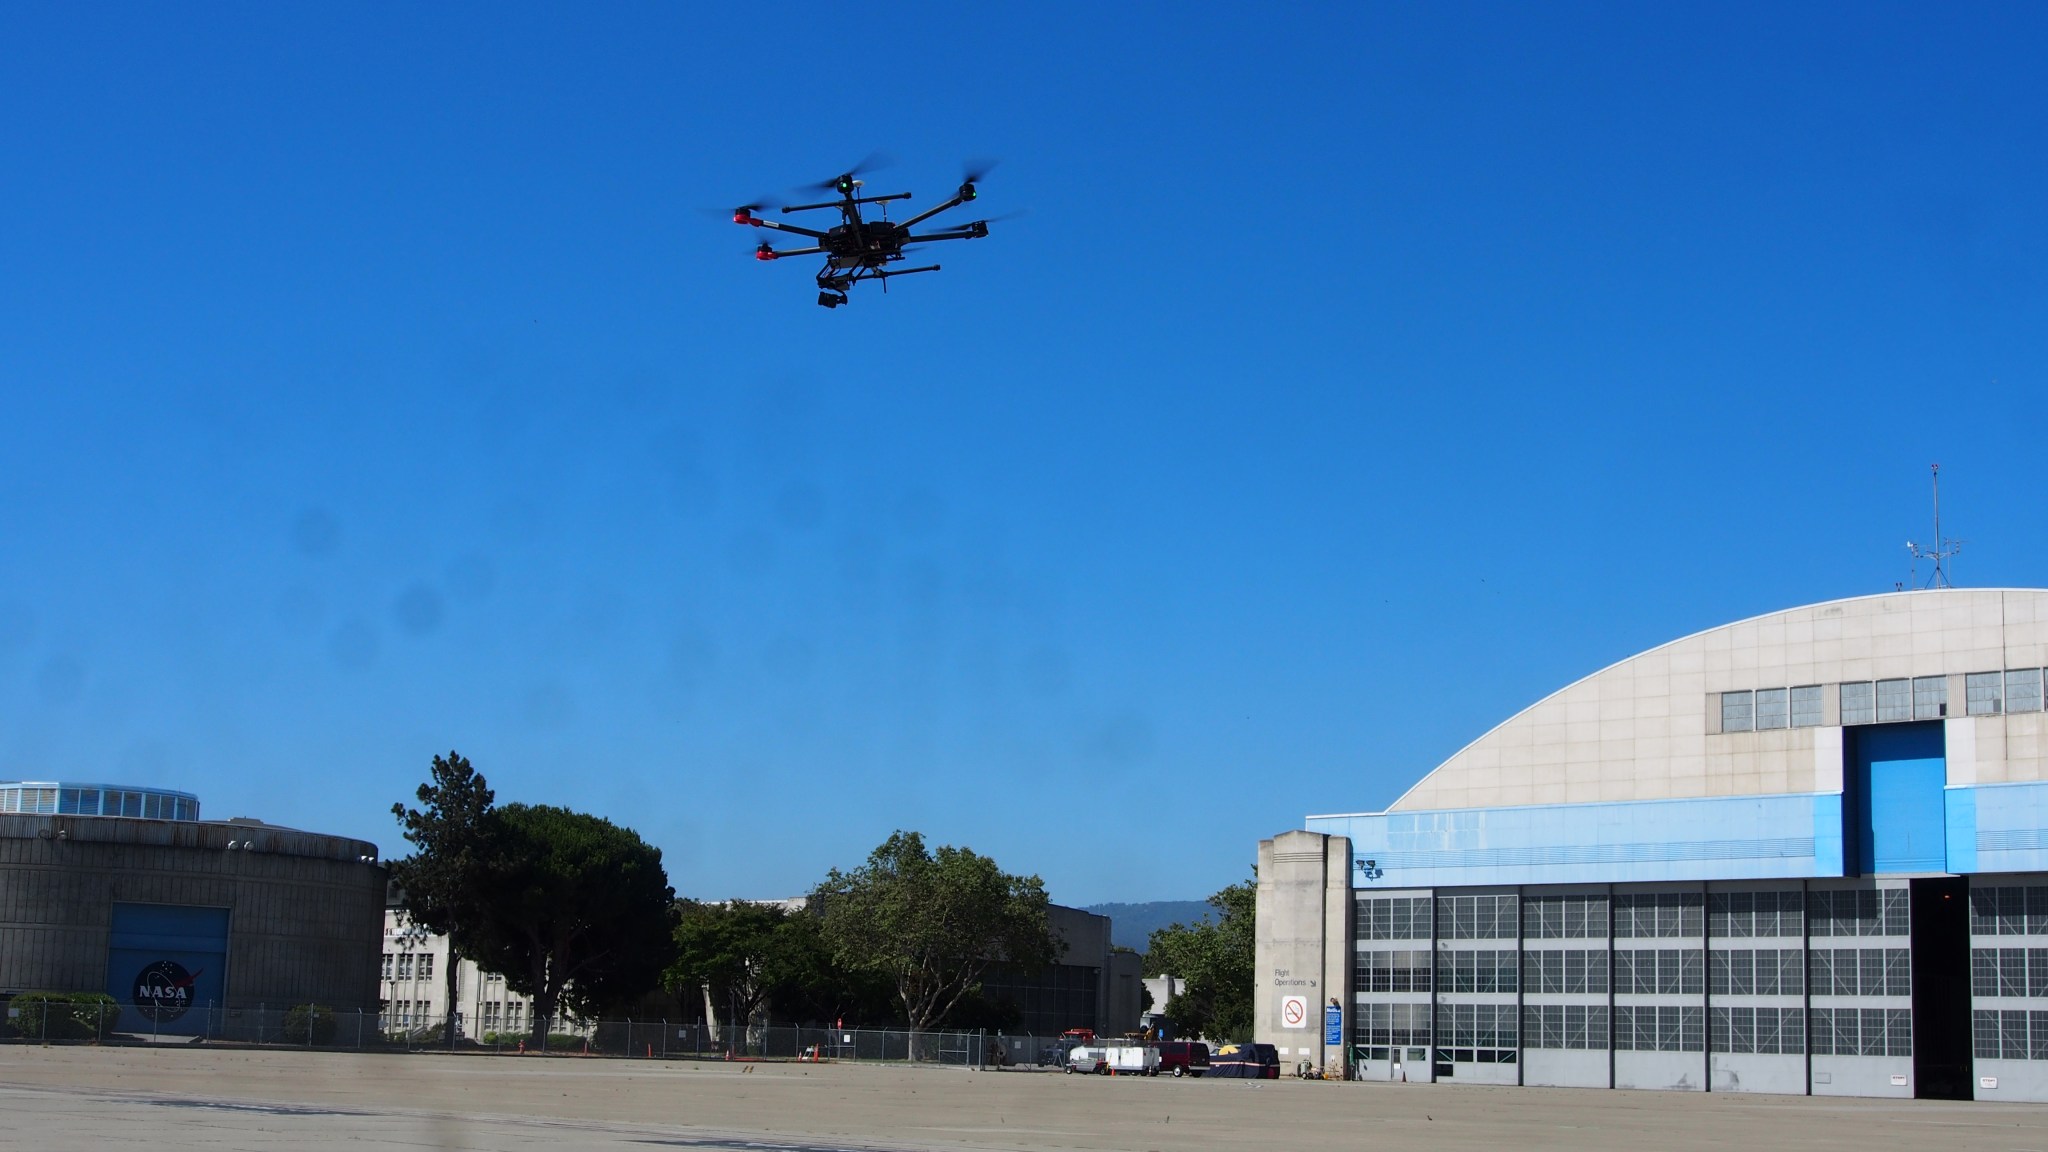 A drone in flight against blue skies.